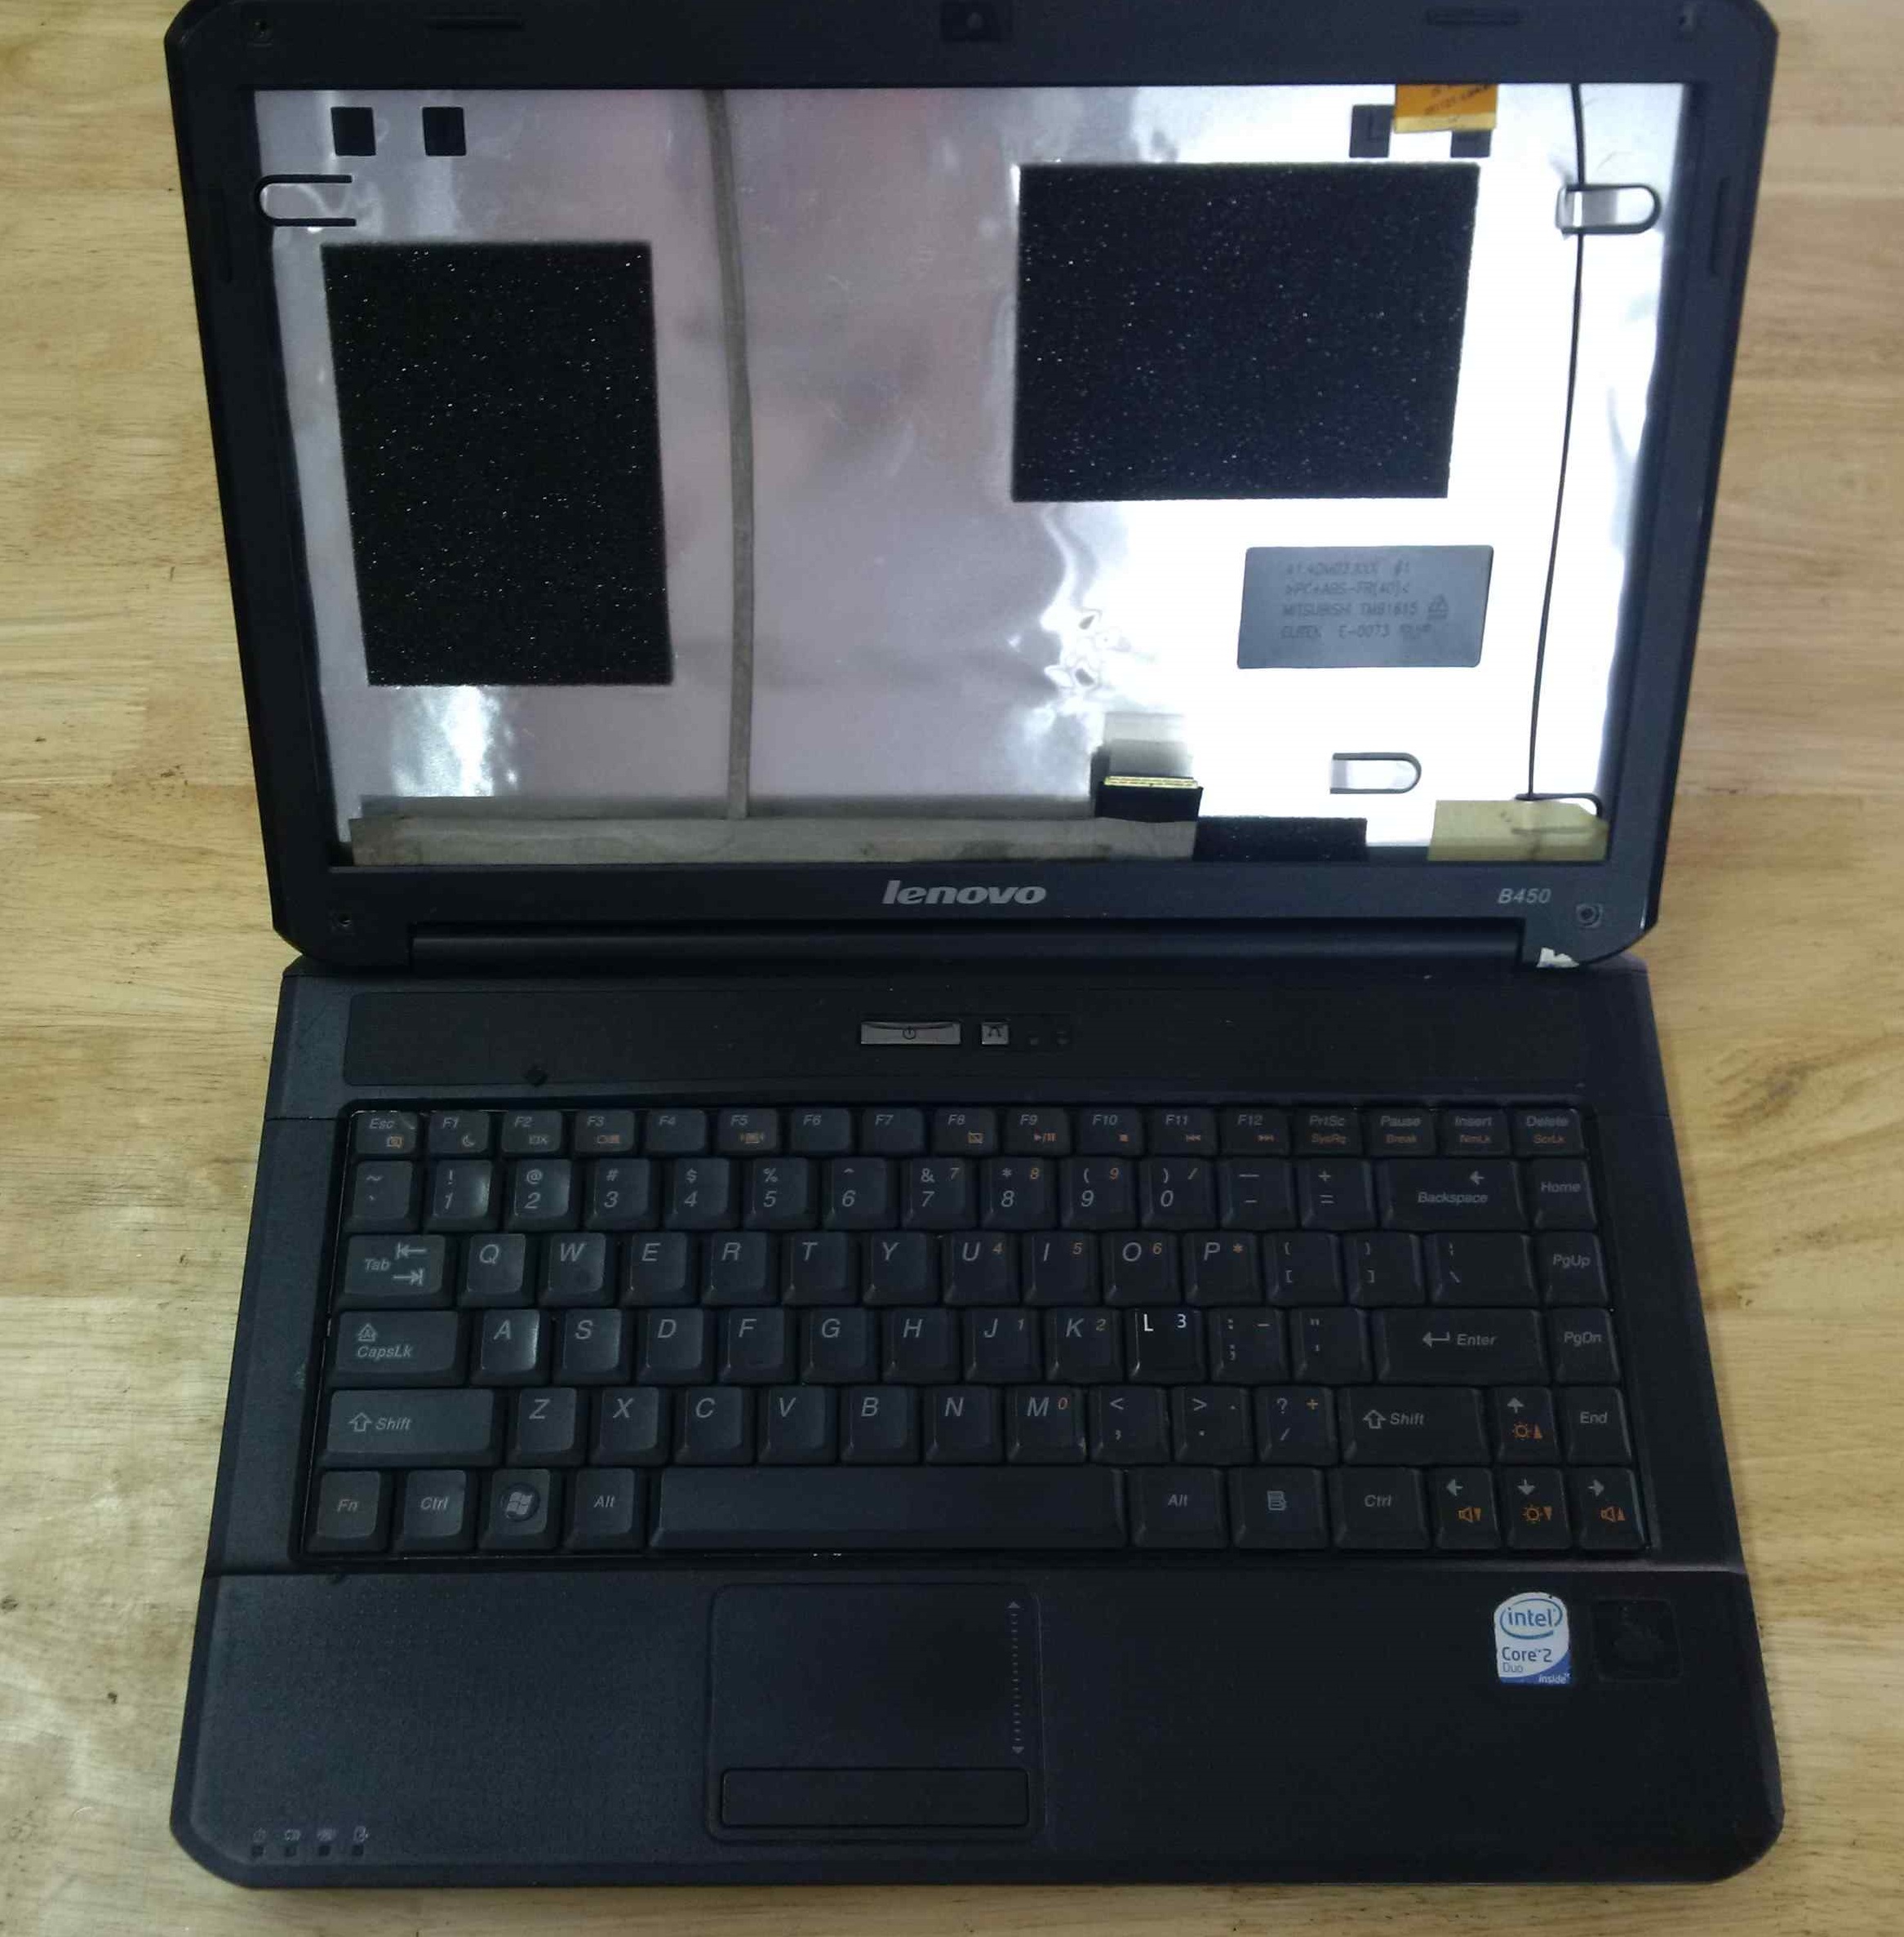 thay vỏ laptop lenovo b450 cũ